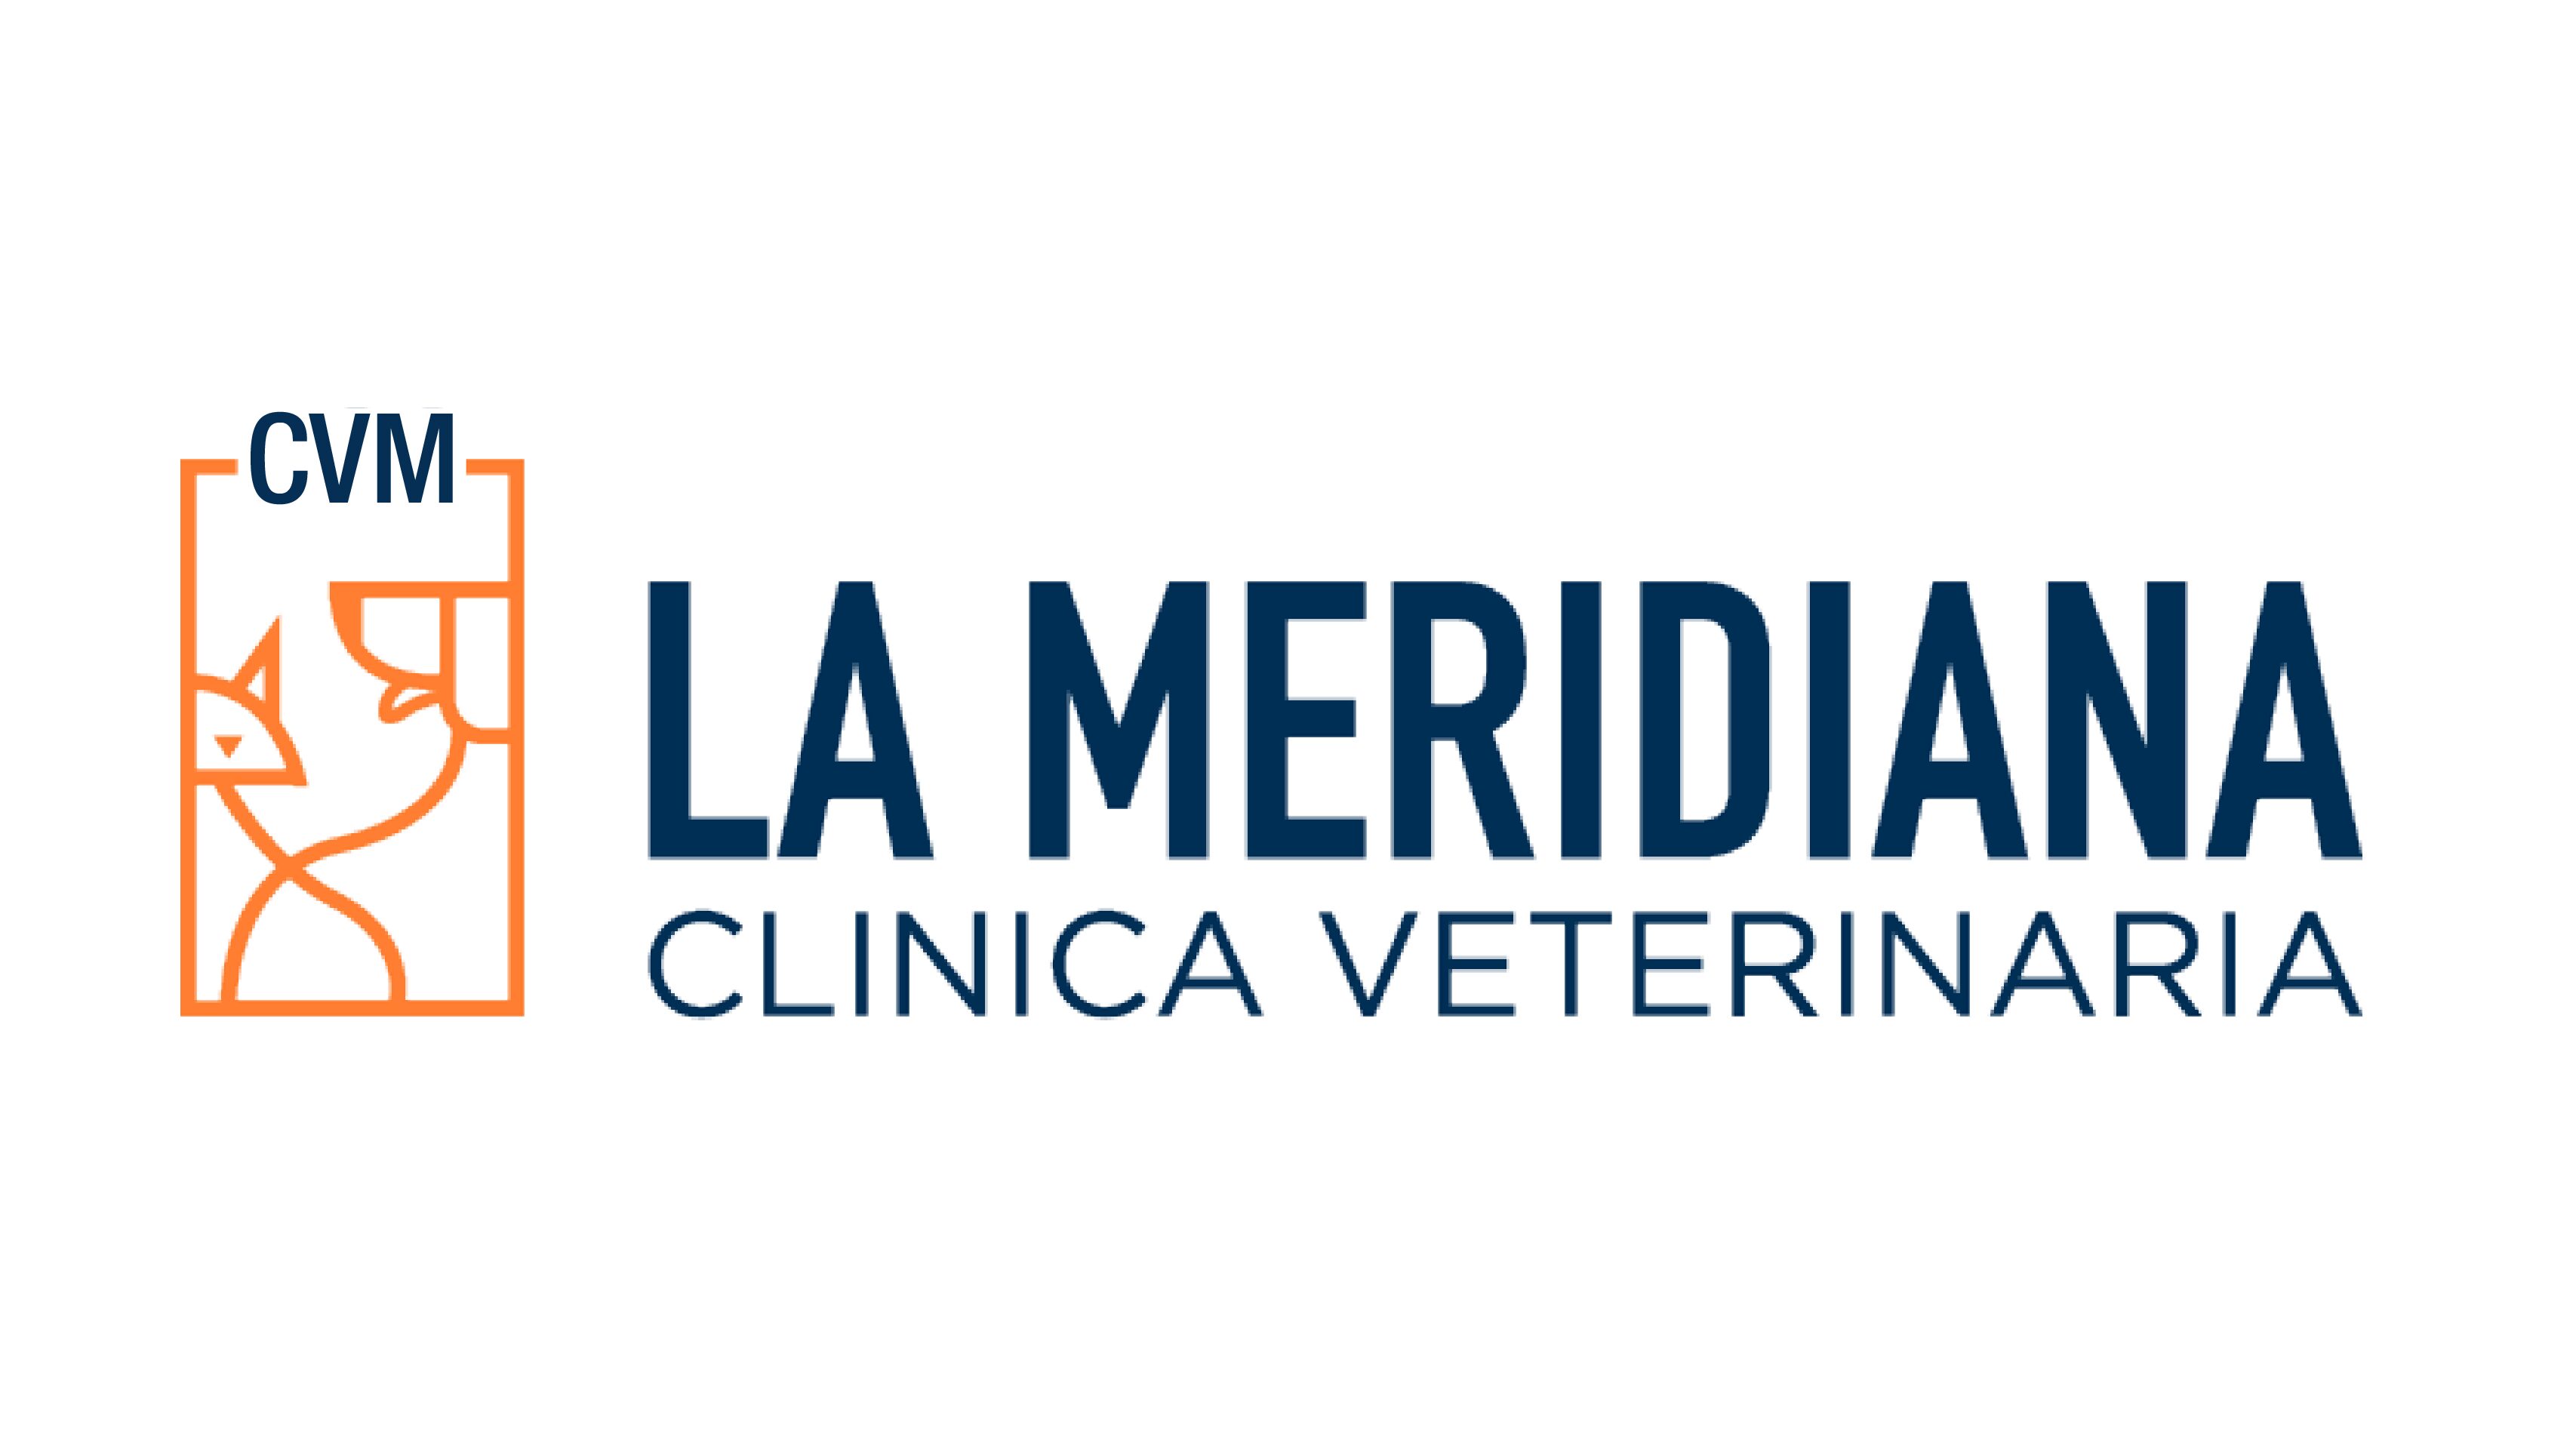 La Meridiana clinica veterinaria